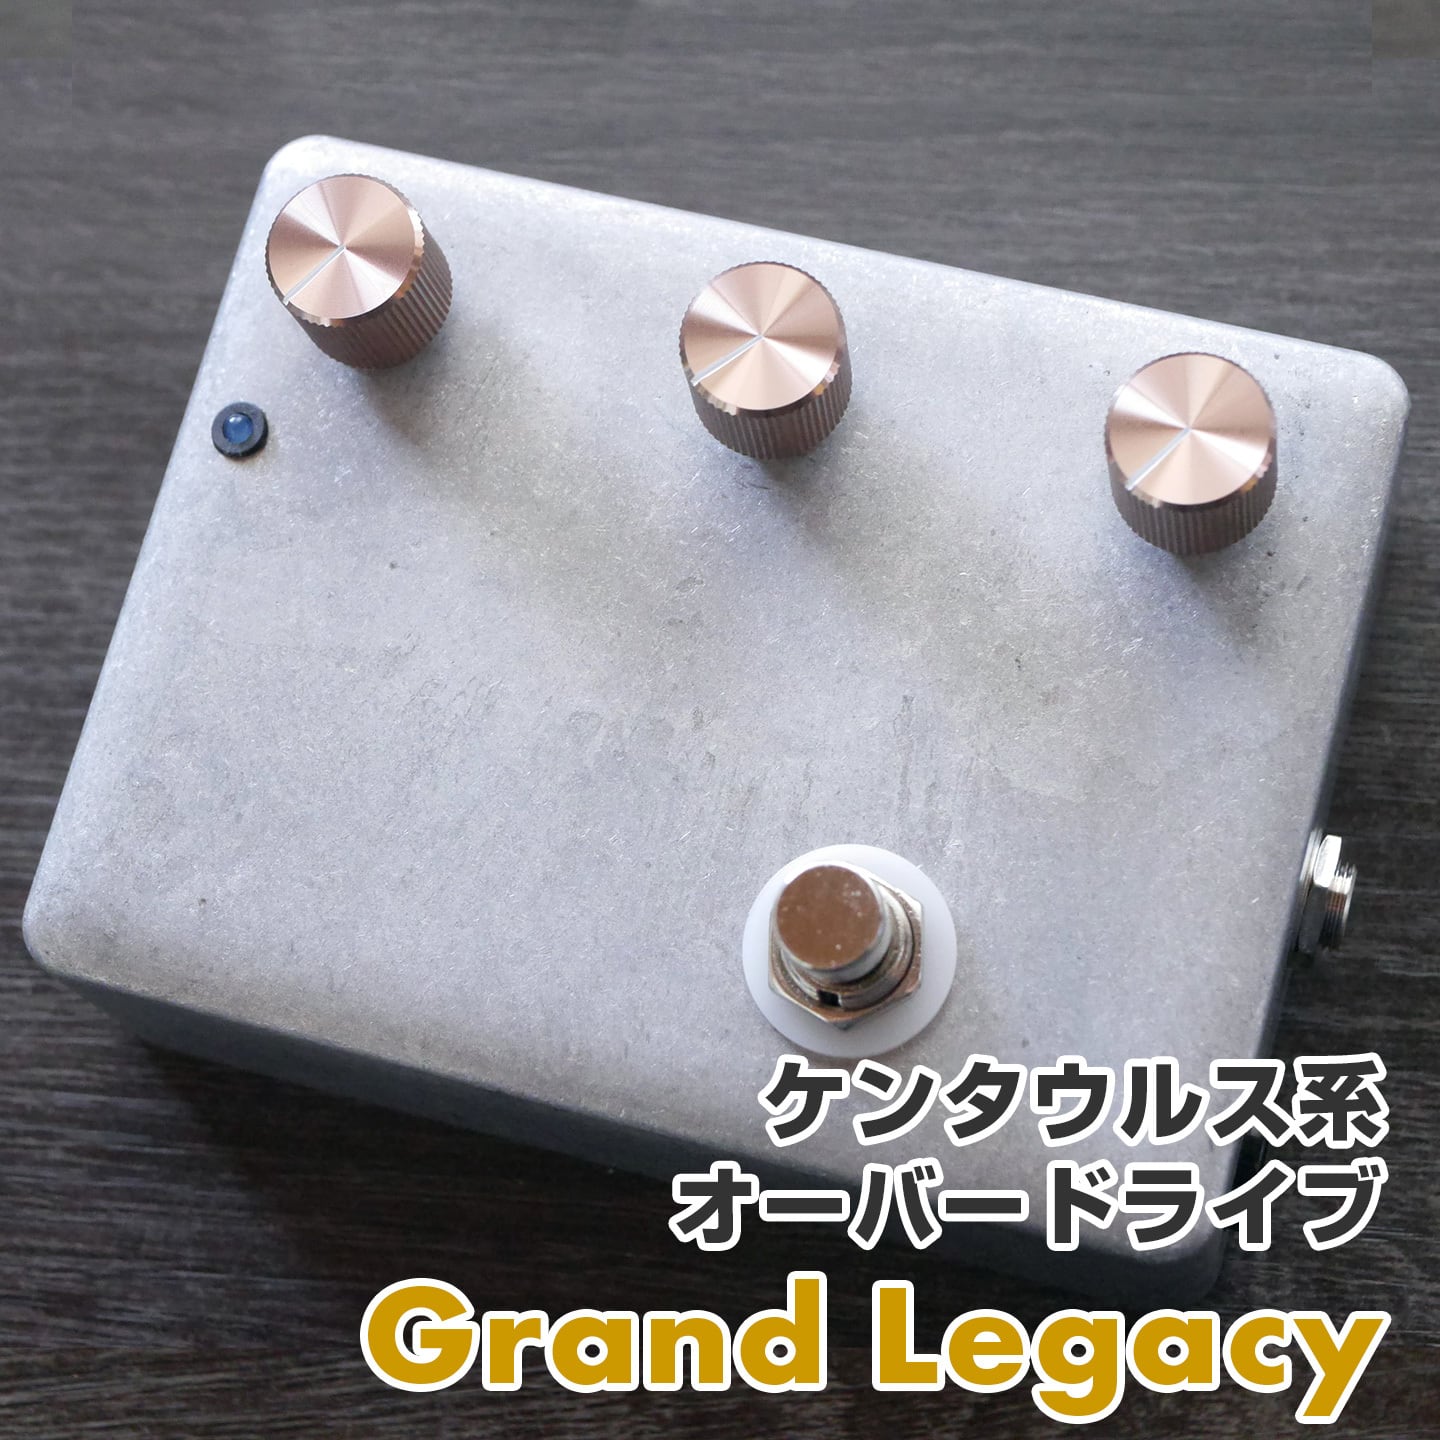 Grand Legacy"Grand Legacy" Klon Centaur系 オーバードライブ《AL STANDARD》